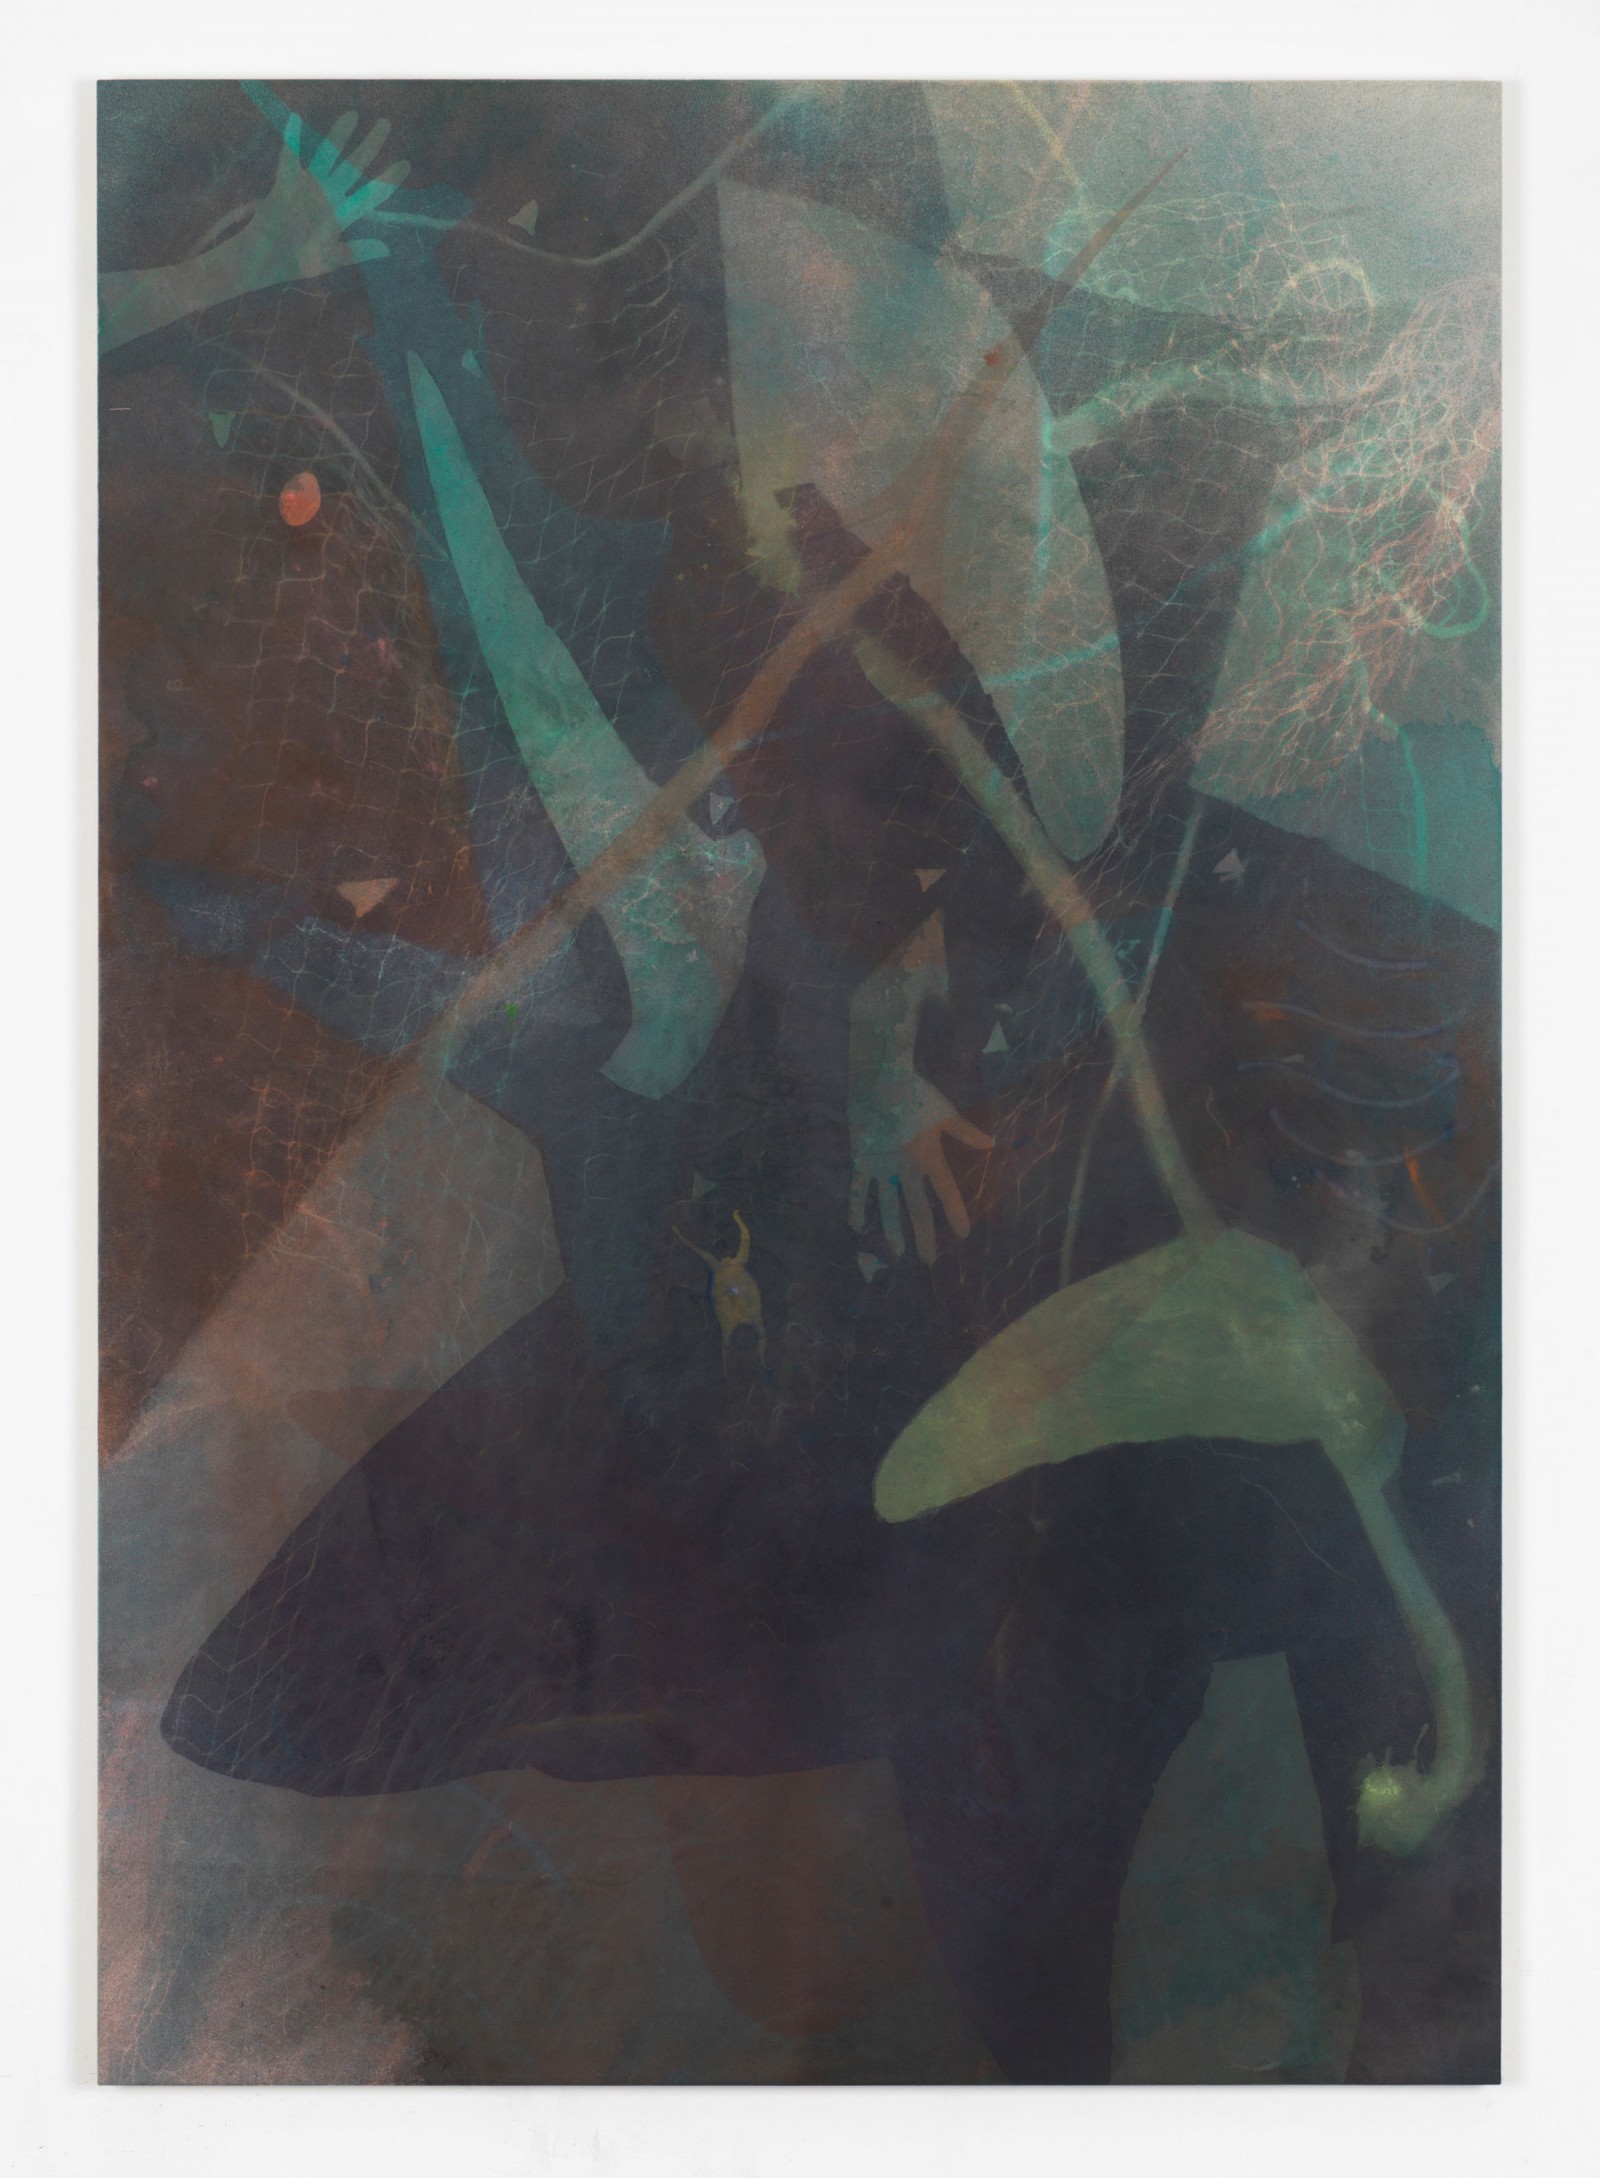 Kim Nekarda: Untitled, 2015, vinyl color & body print on cotton, 200 x 140 cm